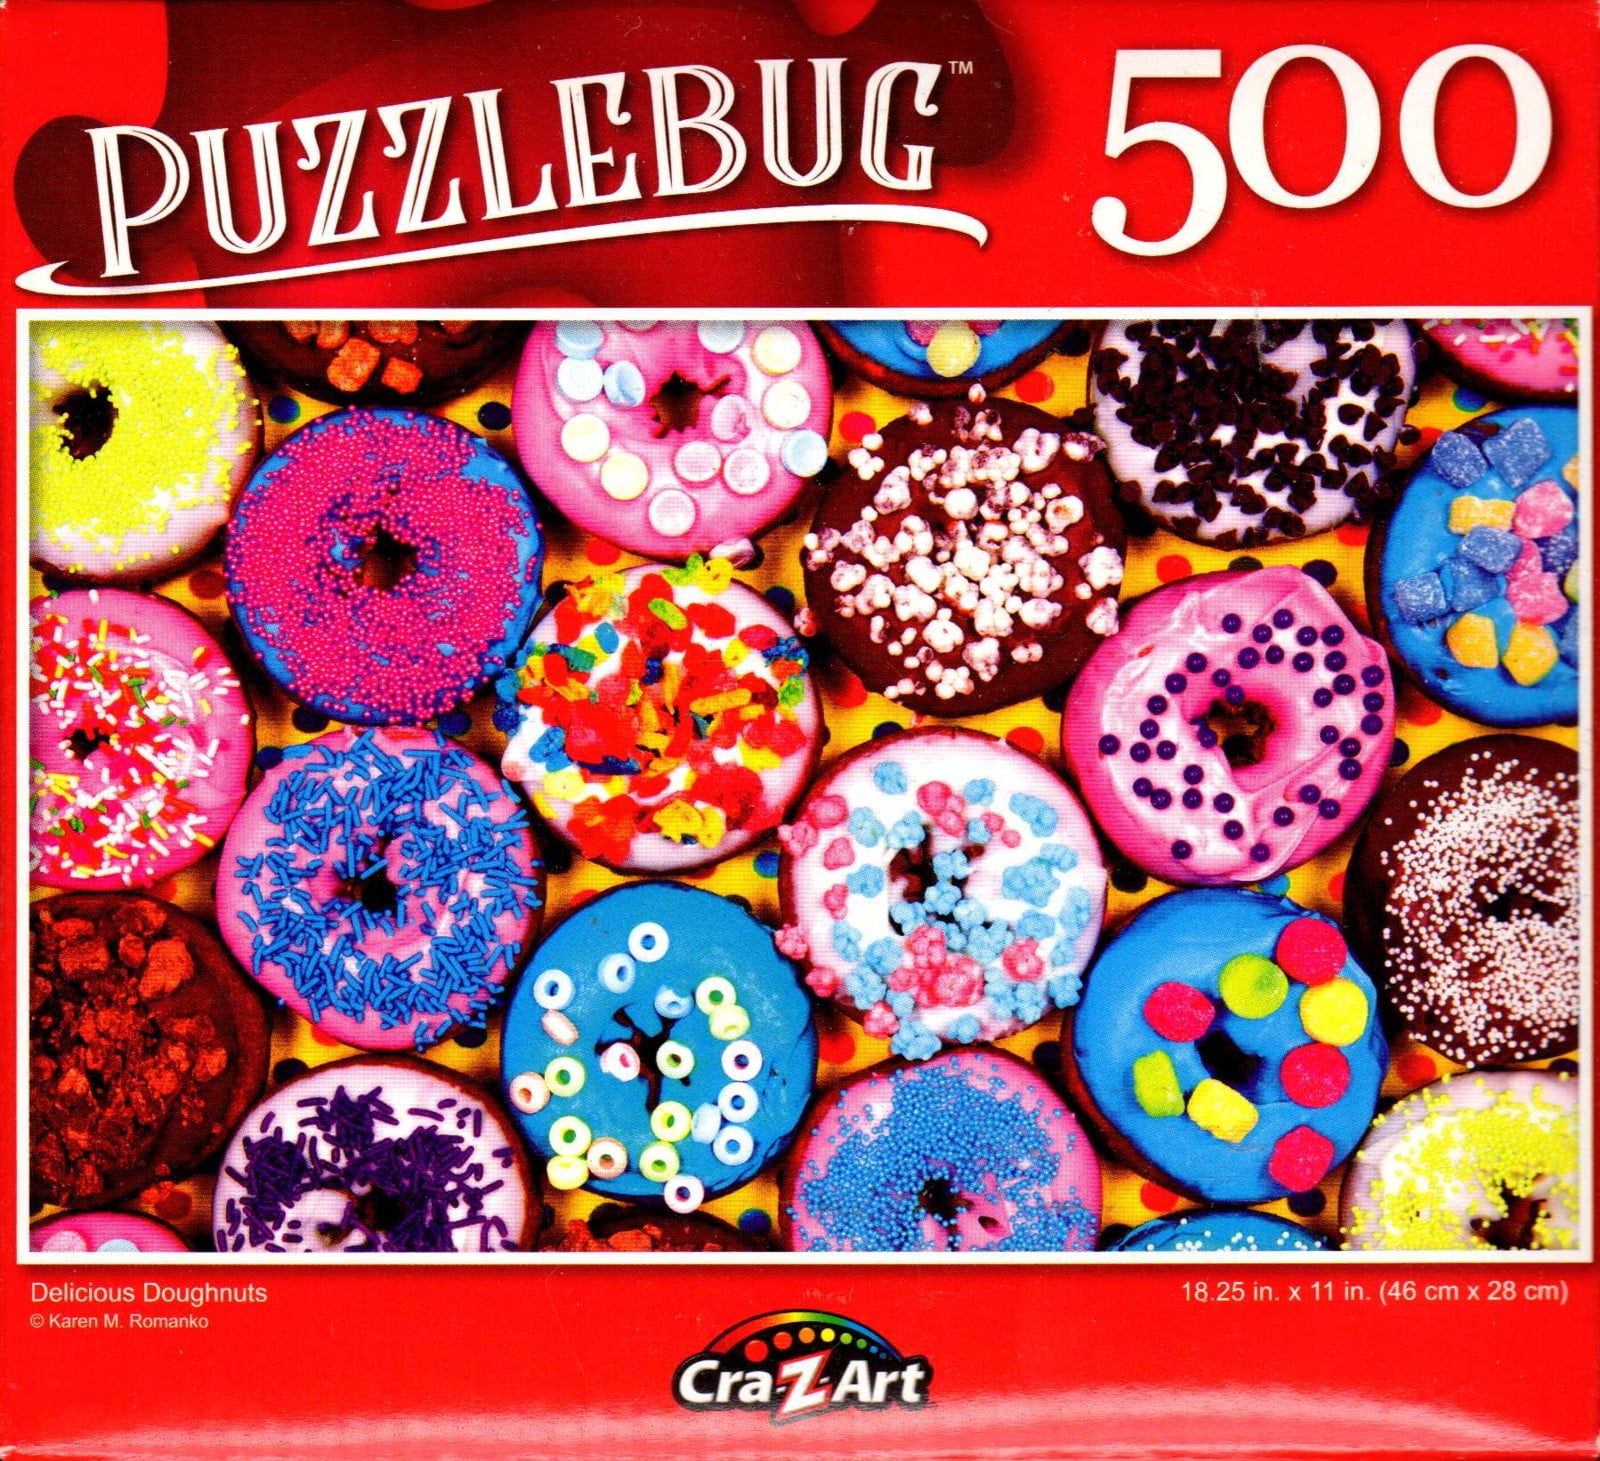 Delicious Doughnuts PuzzleBug CraZart 18.25" X 11" Jigsaw Puzzle 500 Piece 